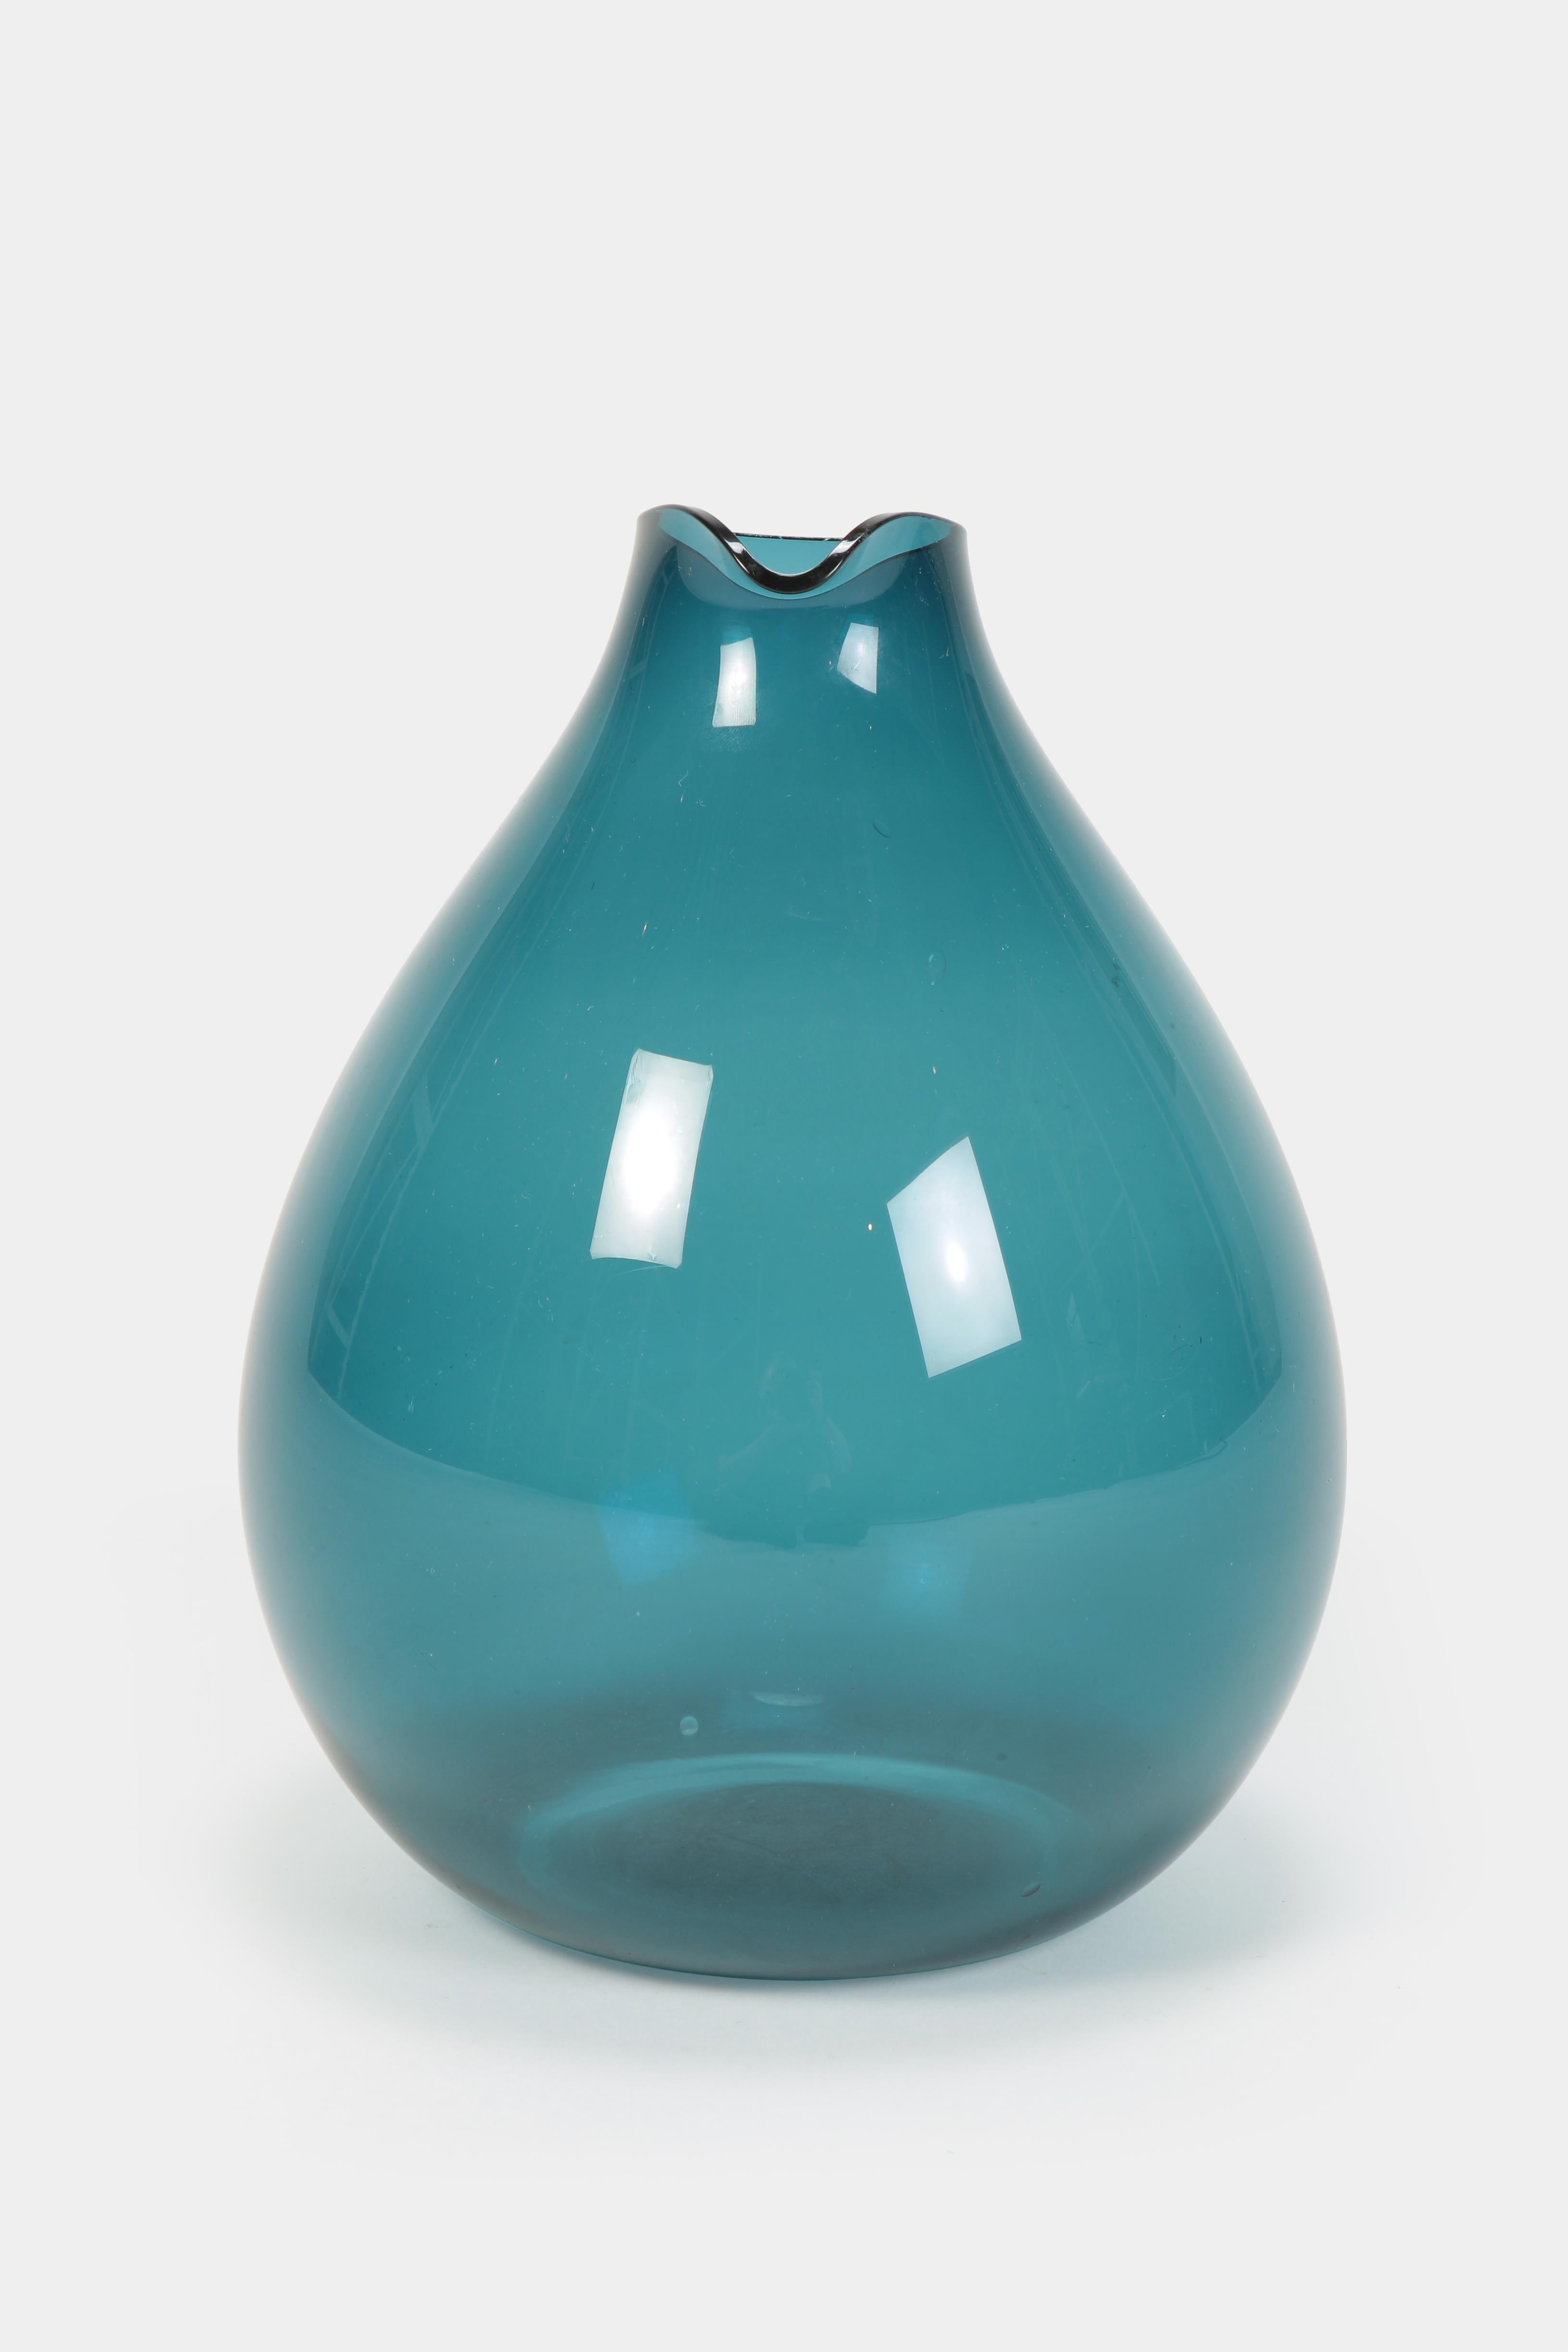 Lovely Kjell Blomberg vase manufactured by Gullaskruf in the 1960s in Sweden. Made of turquoise tinted glass.